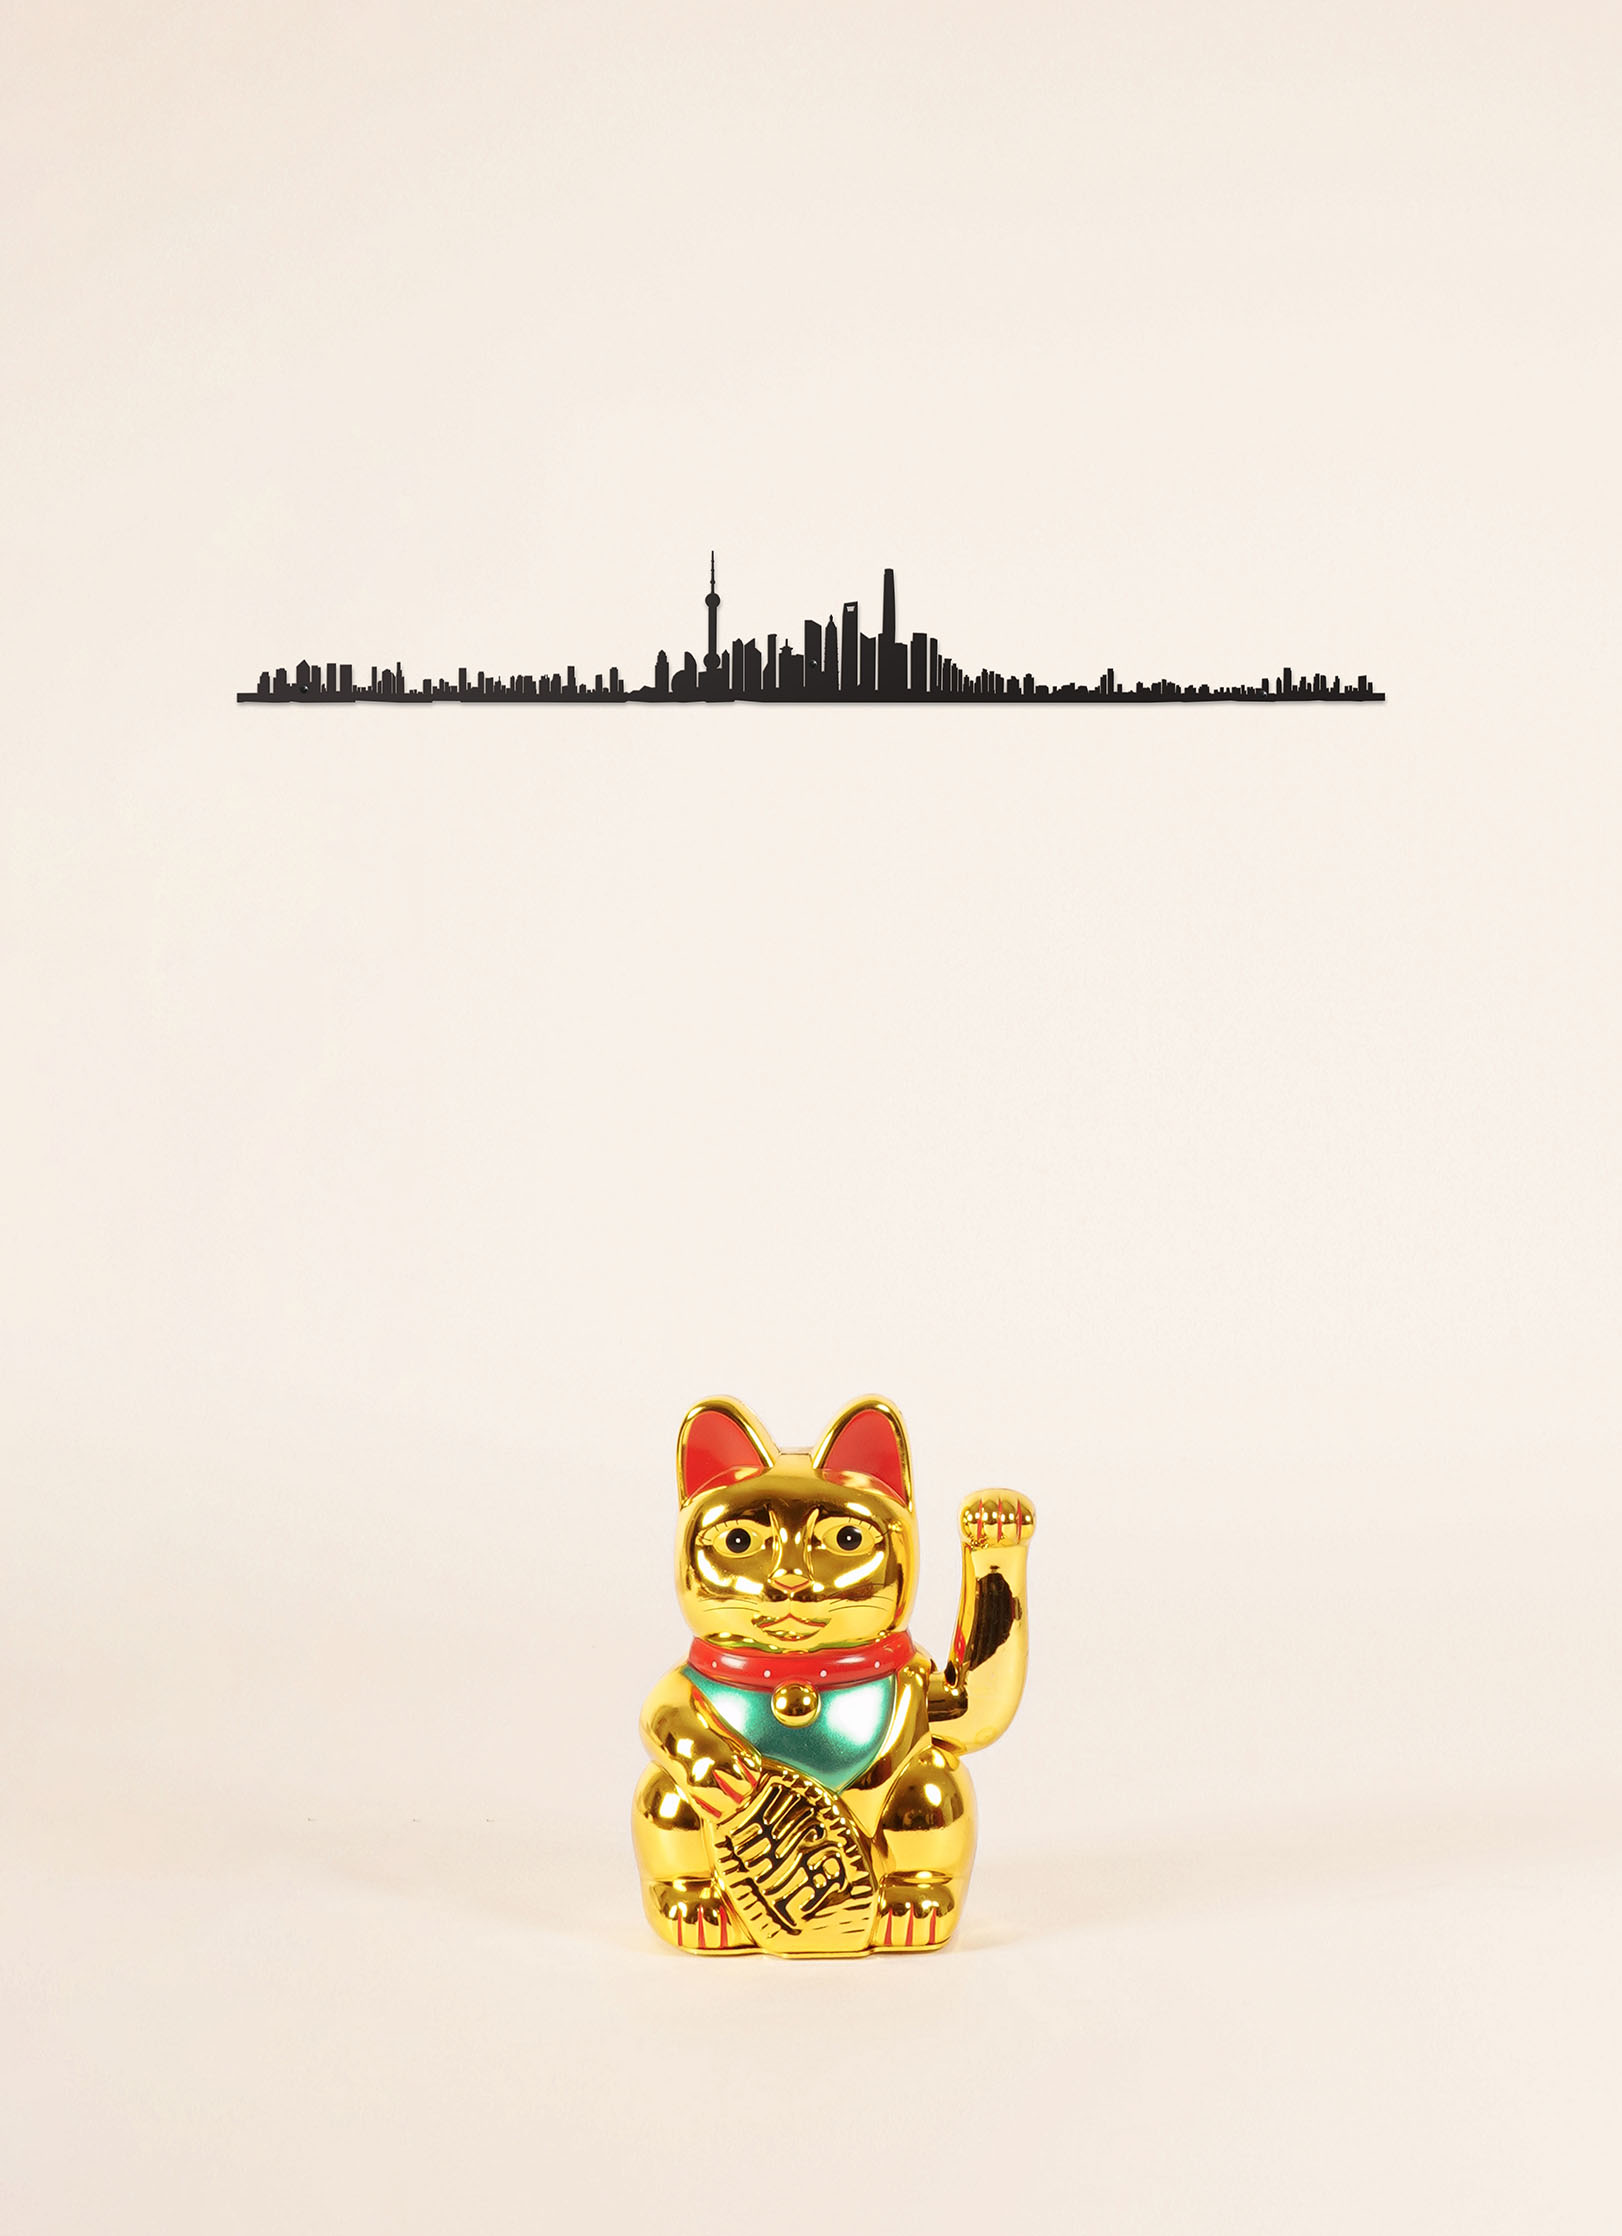 Cliché skyline de Shanghai